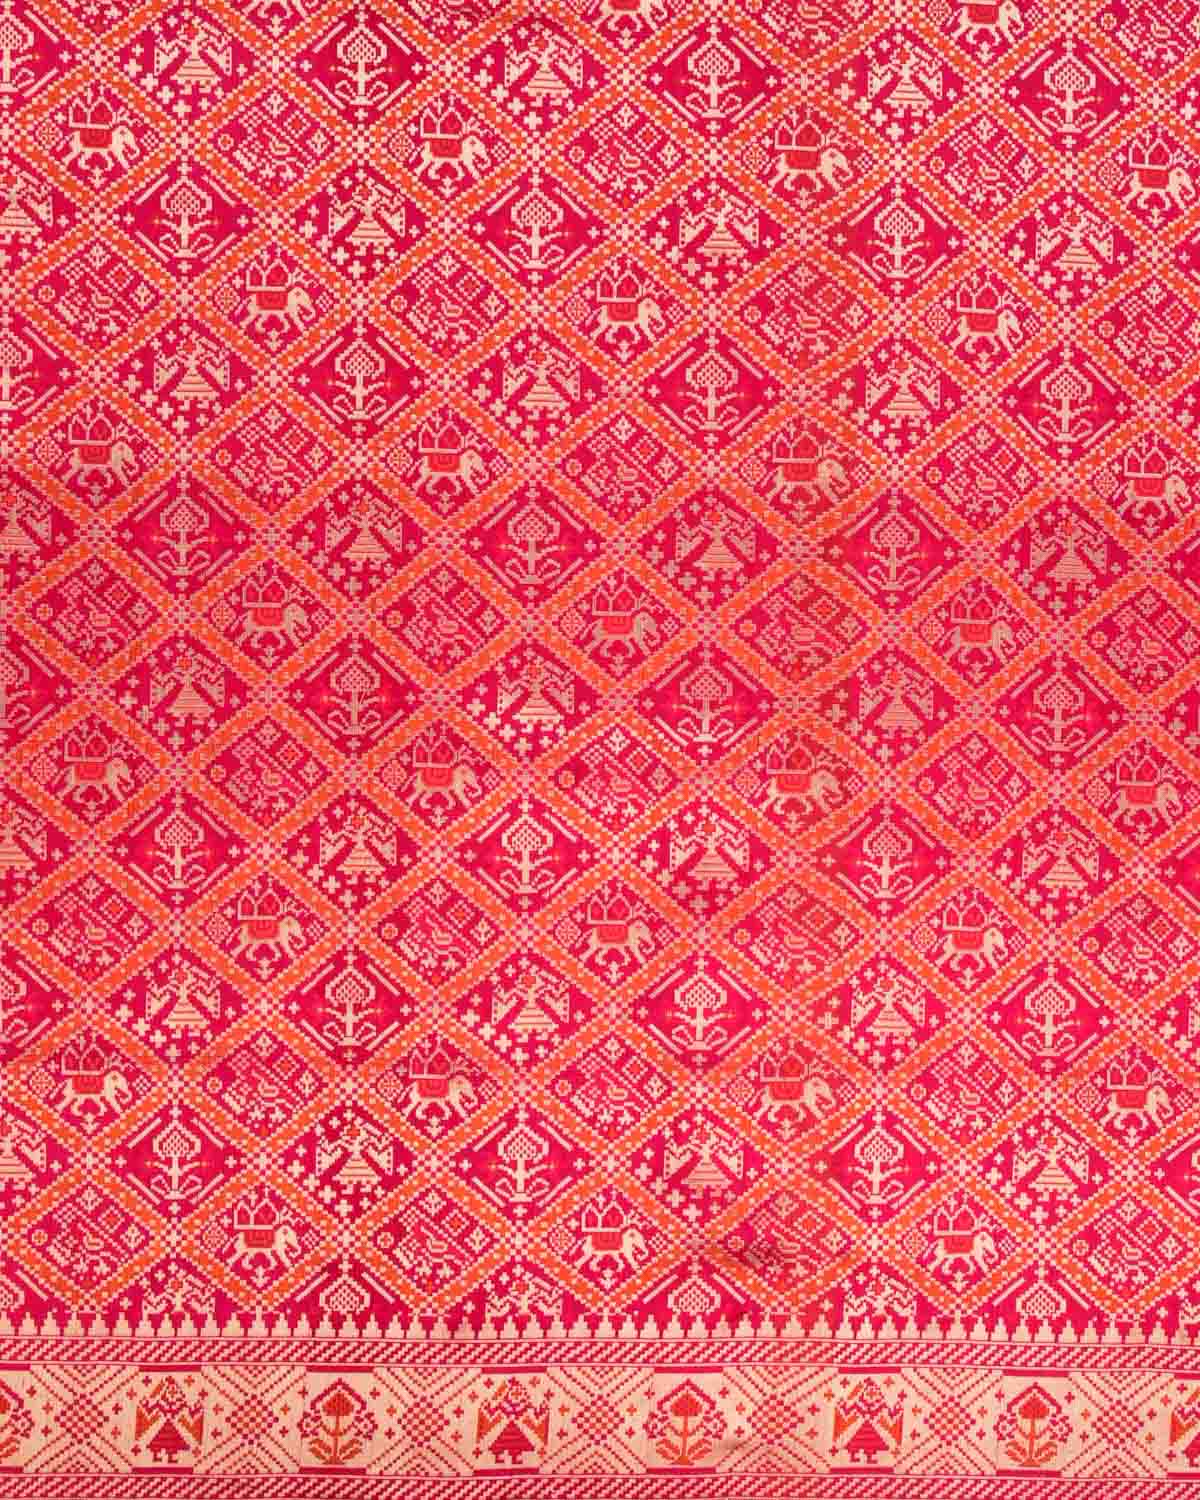 Shot Red-Pink Banarasi Patola Tehari Resham Gold Zari Cutwork Brocade Handwoven Katan Silk Saree - By HolyWeaves, Benares